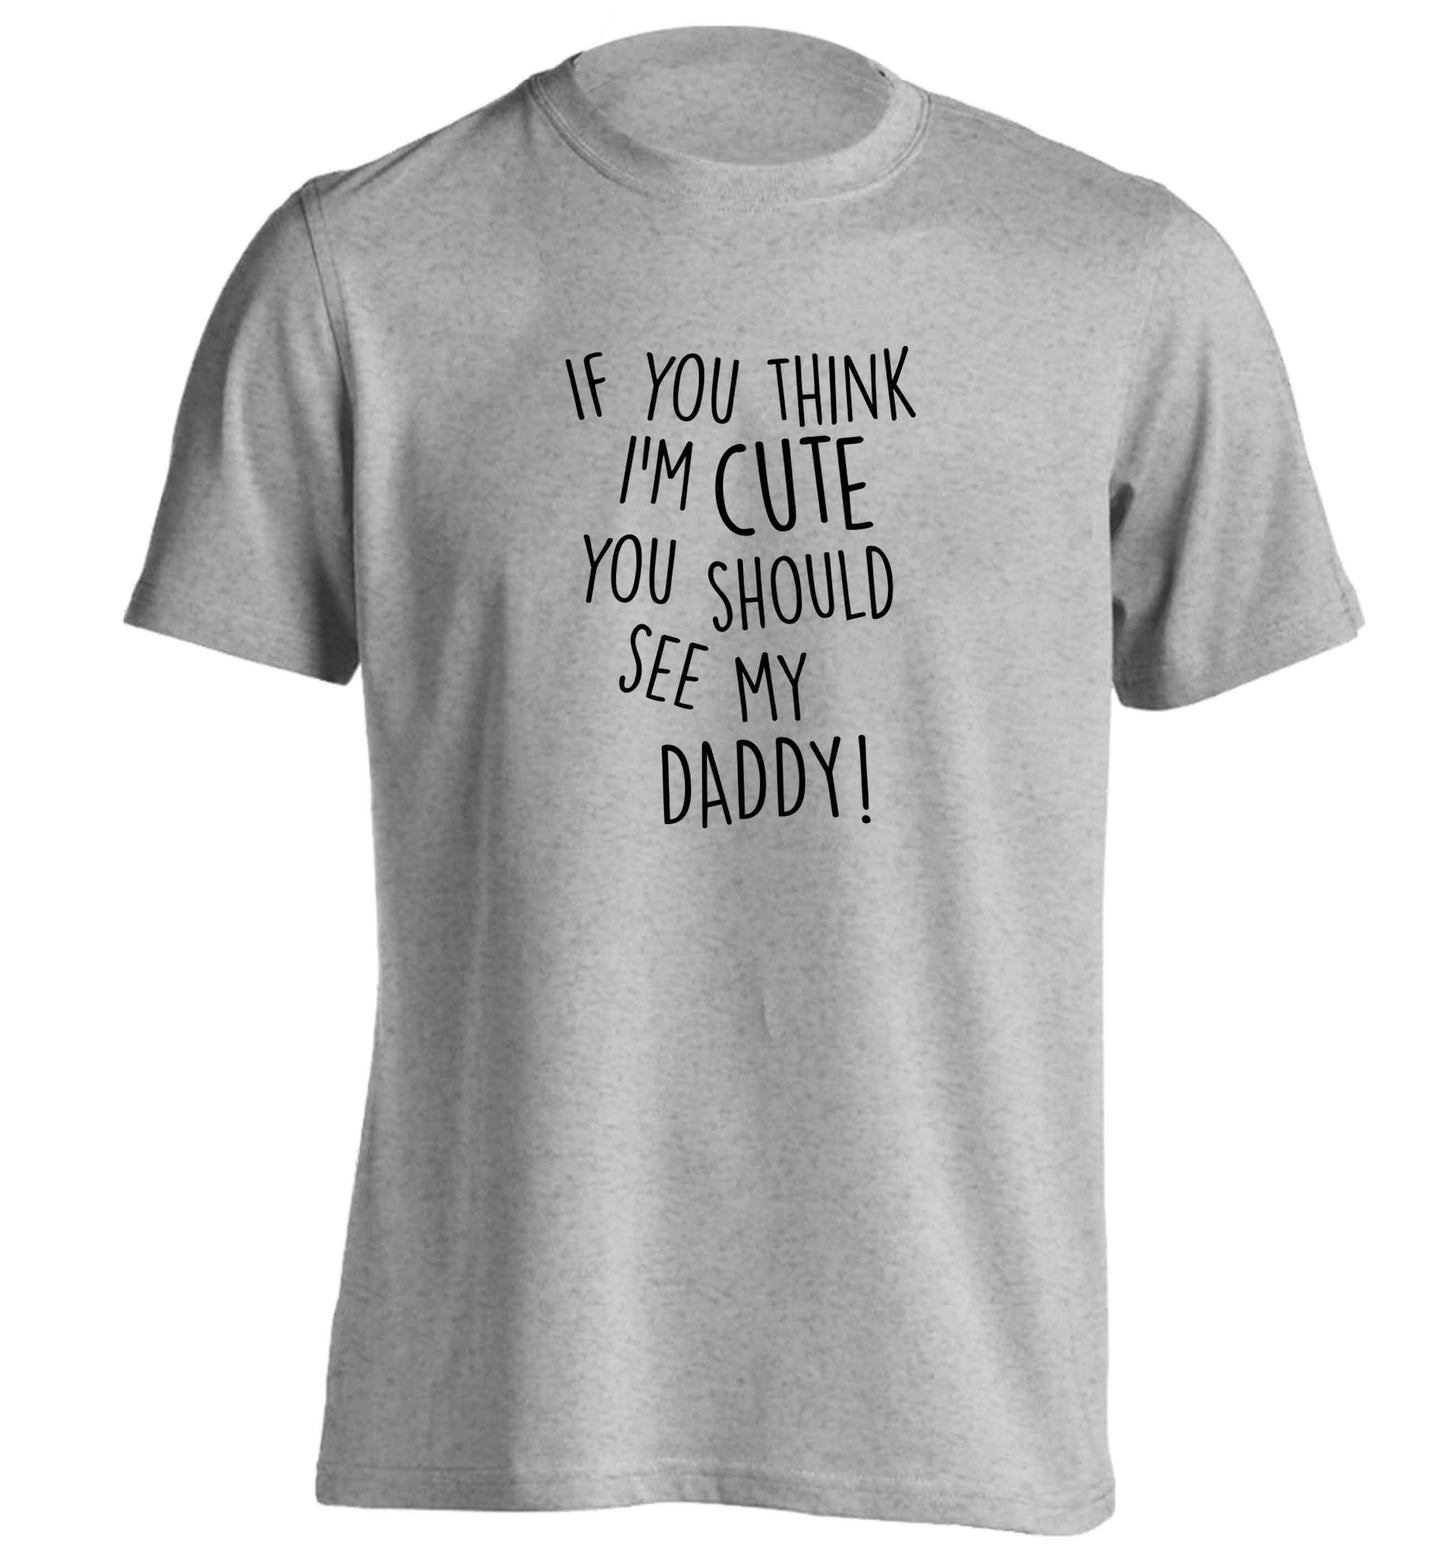 If you think I'm cute you should see my daddy adults unisex grey Tshirt 2XL